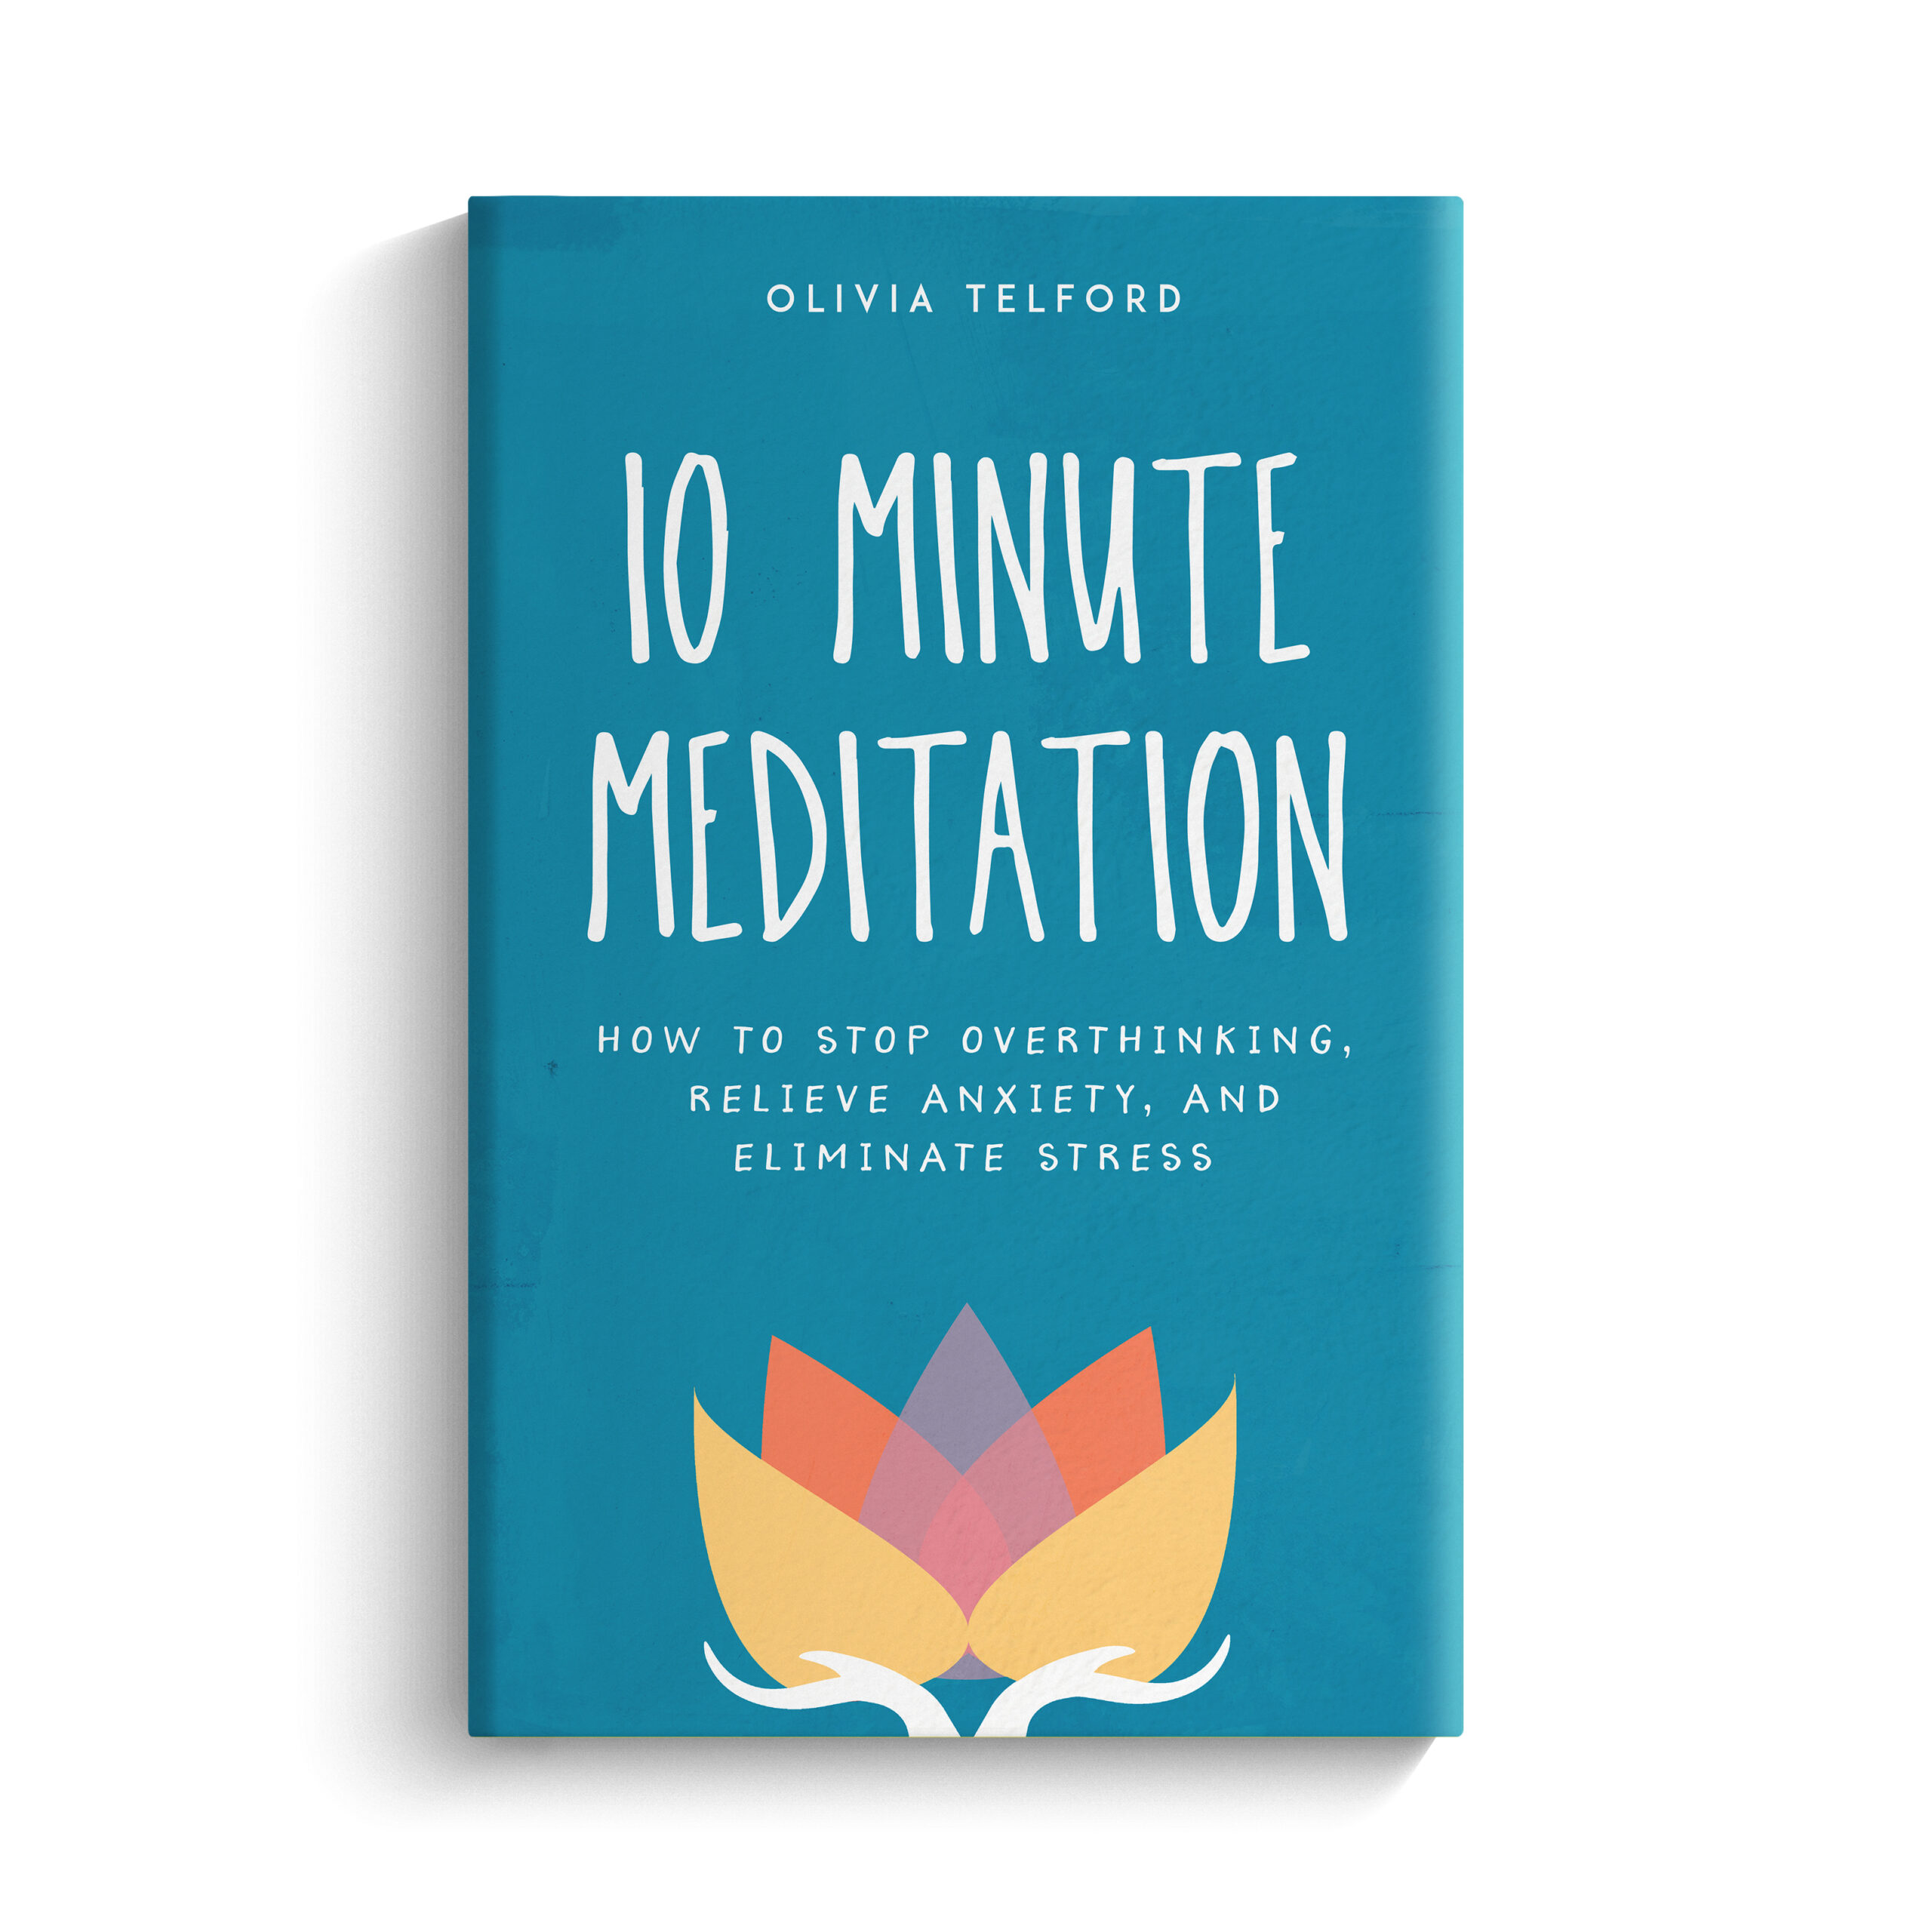 10 Minute Meditation by Olivia Telford